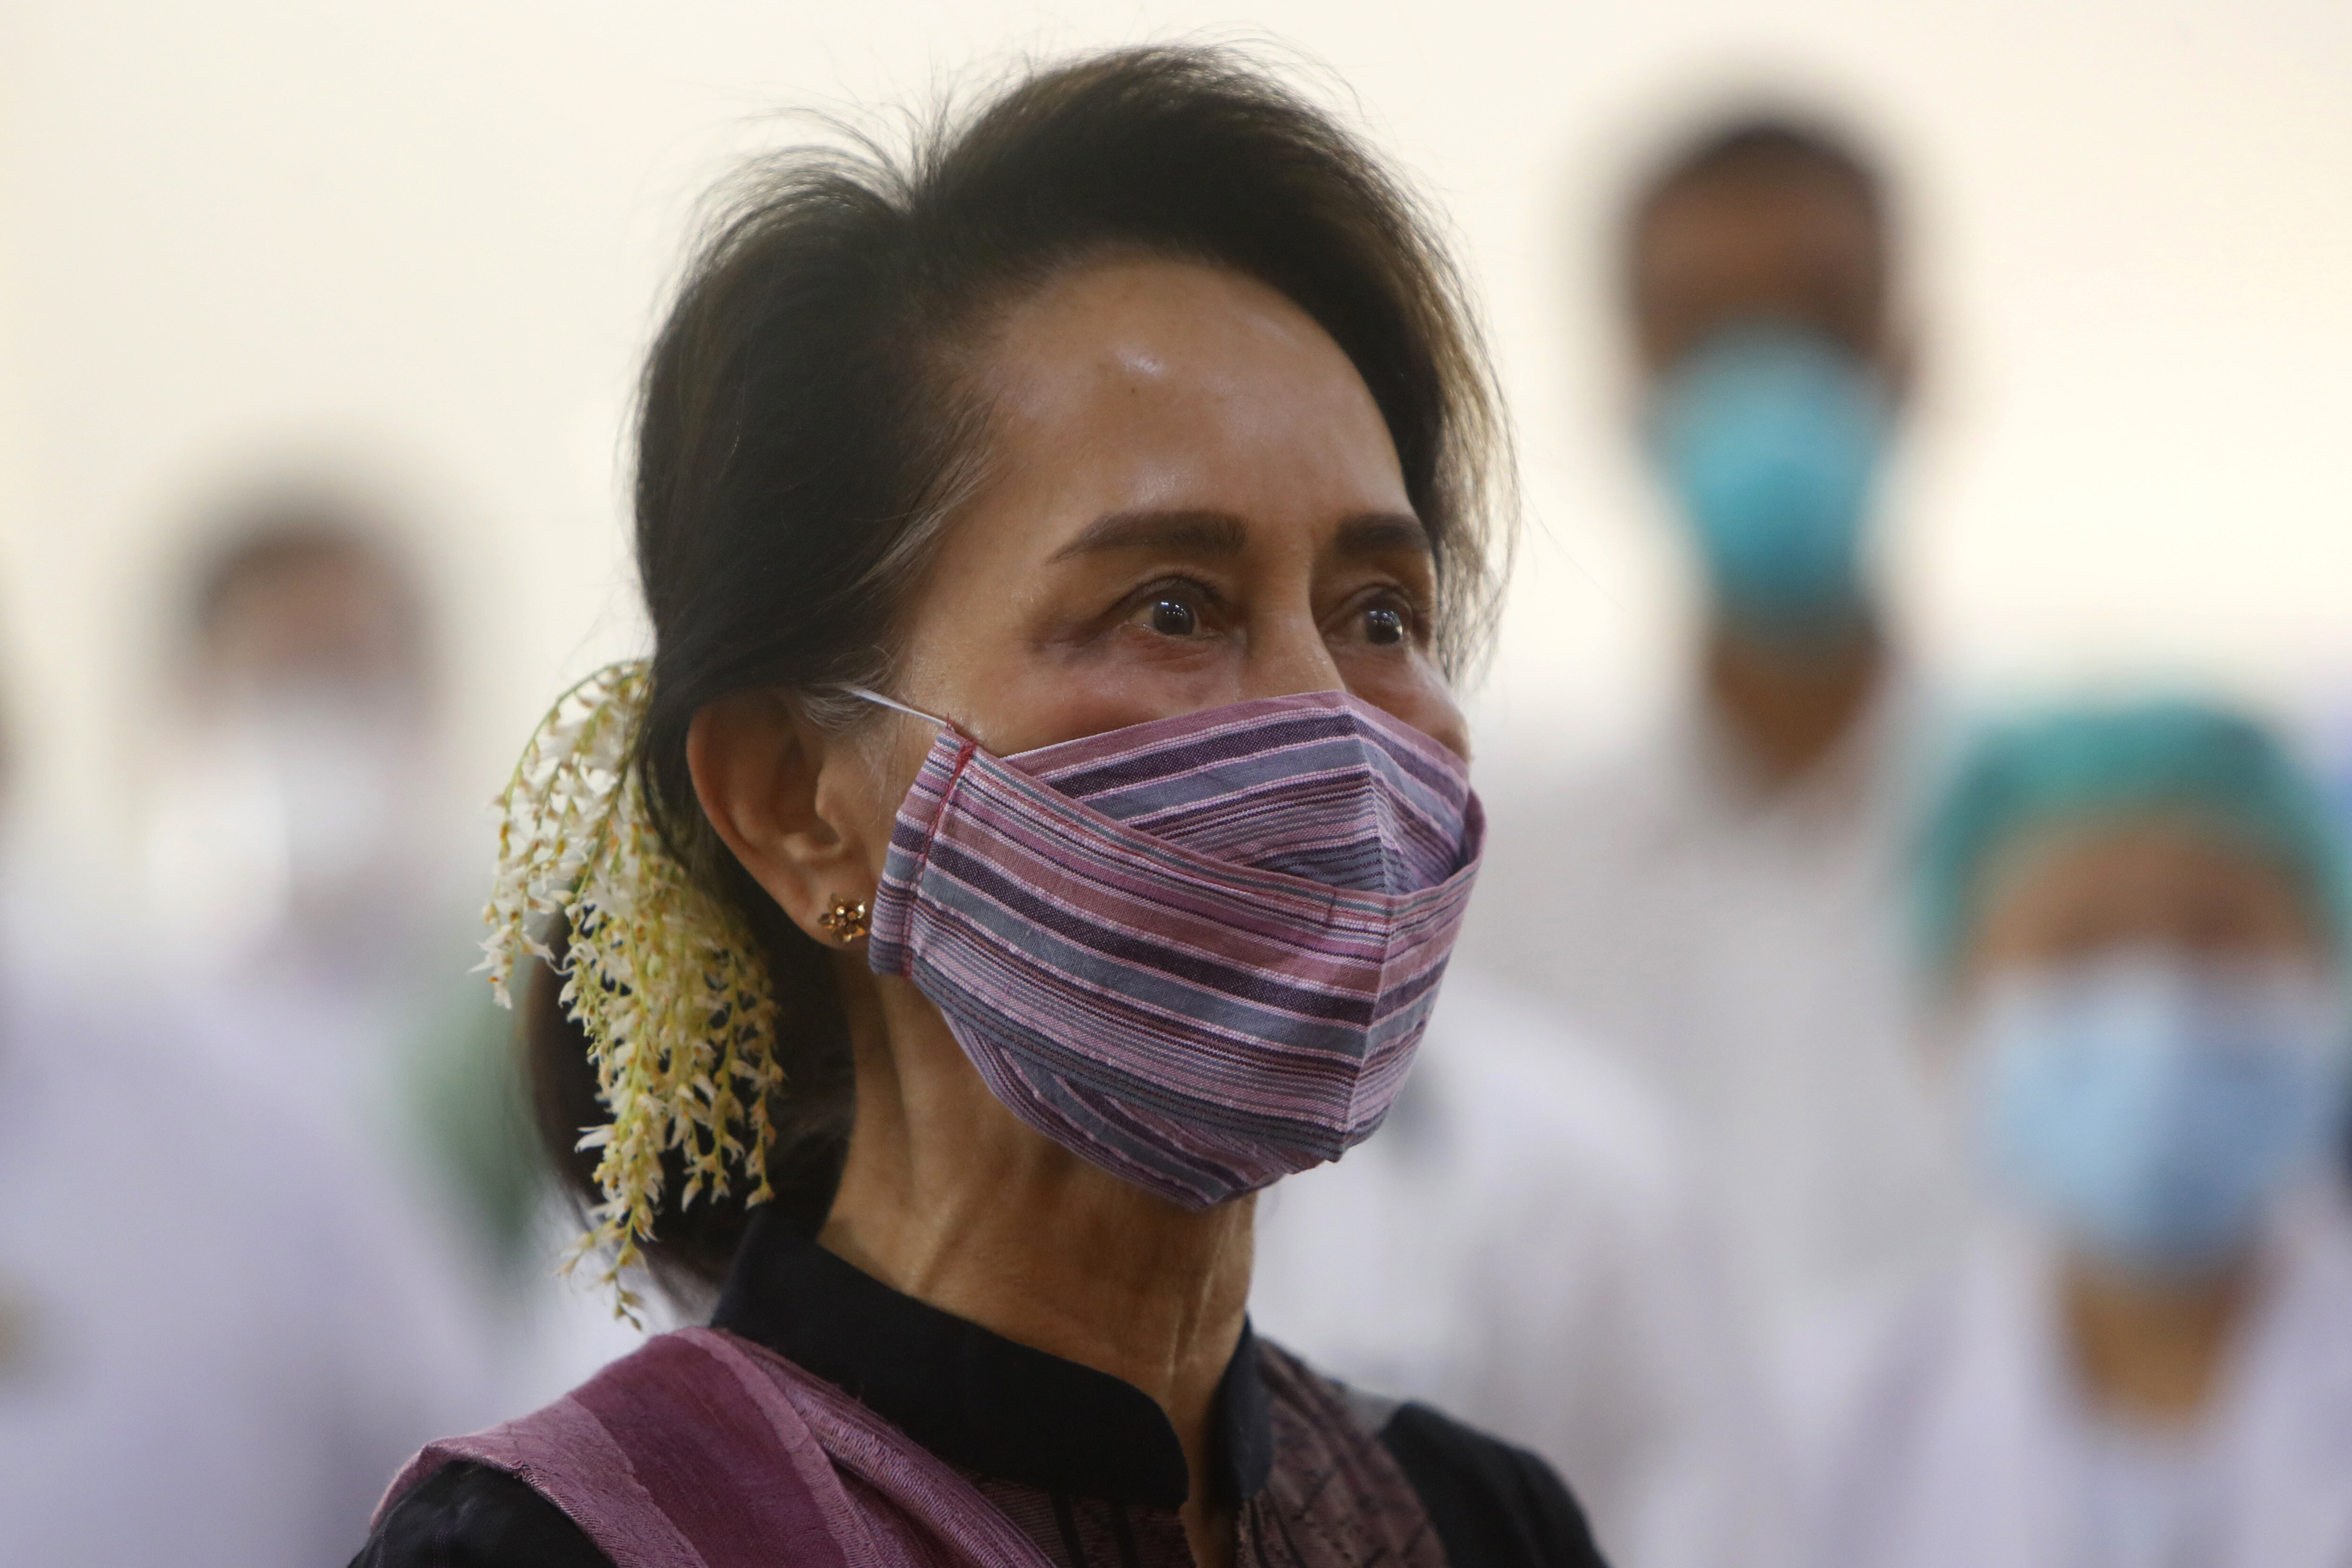 Aung San Suu Kyi arrêtée en Birmanie, condamnations internationales